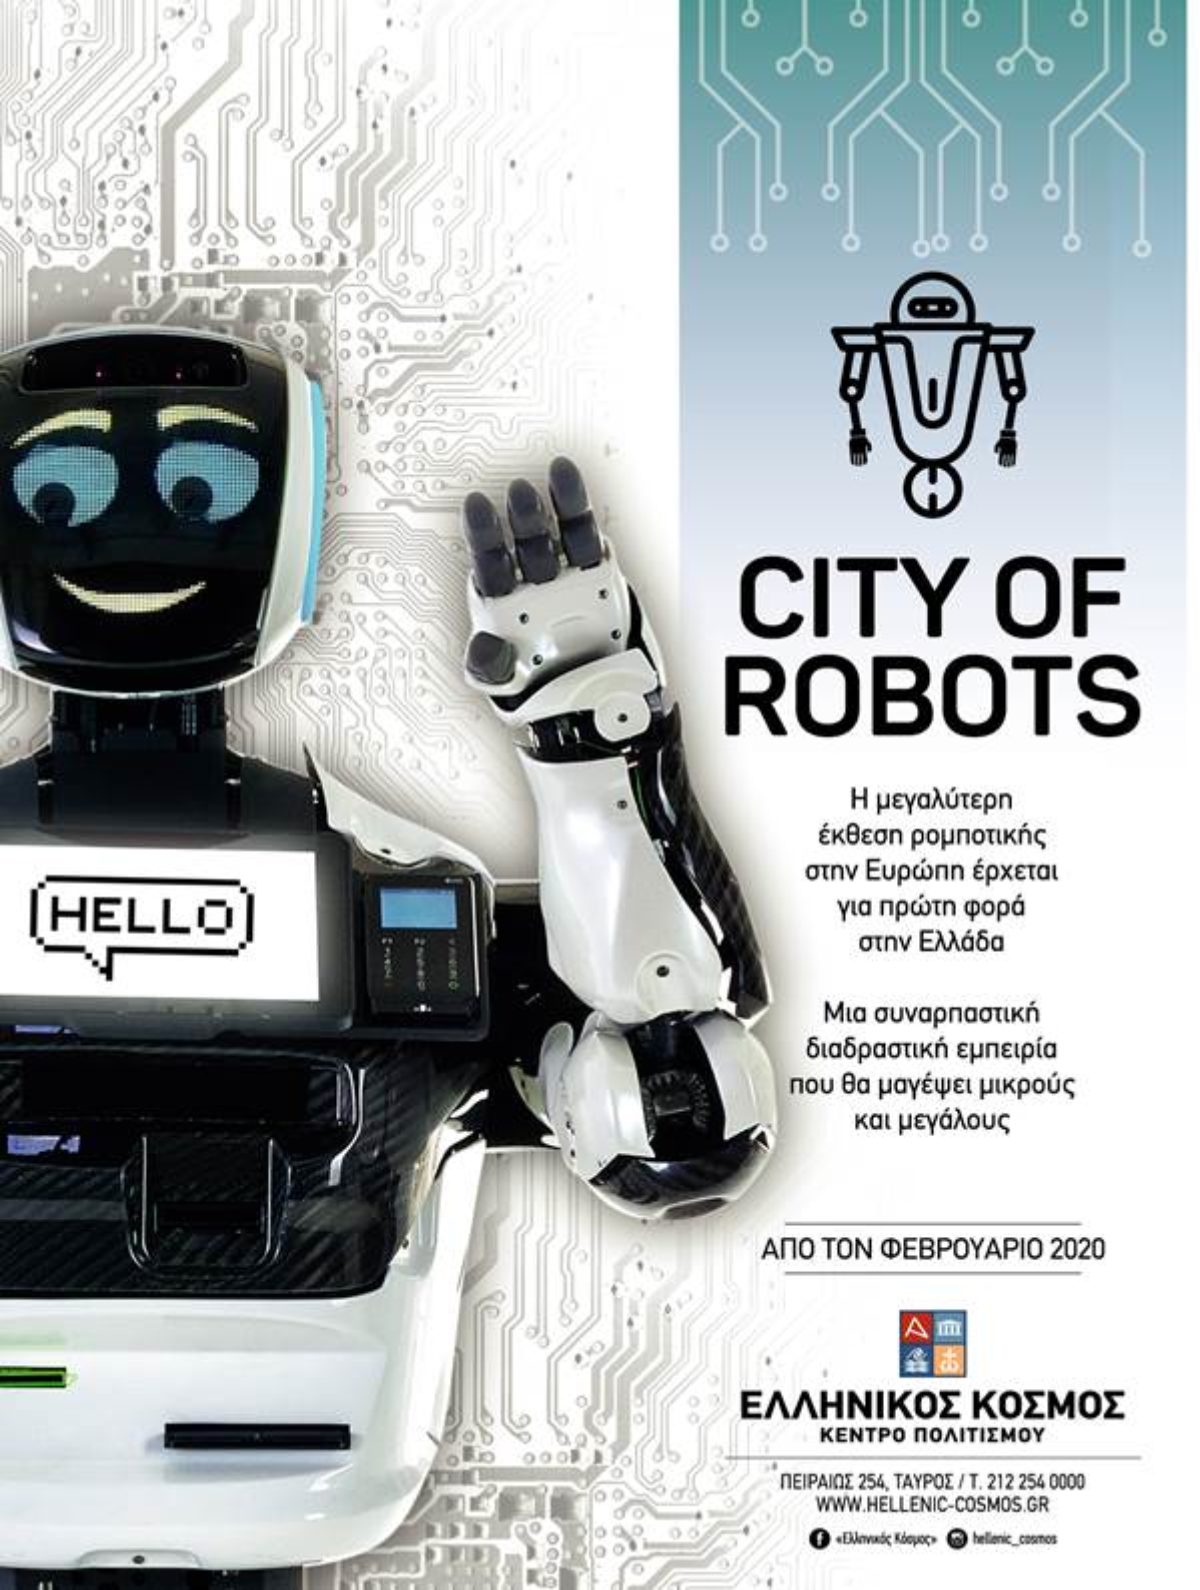 City of Robots ǀ Η μεγαλύτερη έκθεση ρομποτικής για πρώτη φορά στην Ελλάδα! ǀ Έναρξη λειτουργίας, τιμές εισιτηρίων & ωράριο έκθεσης